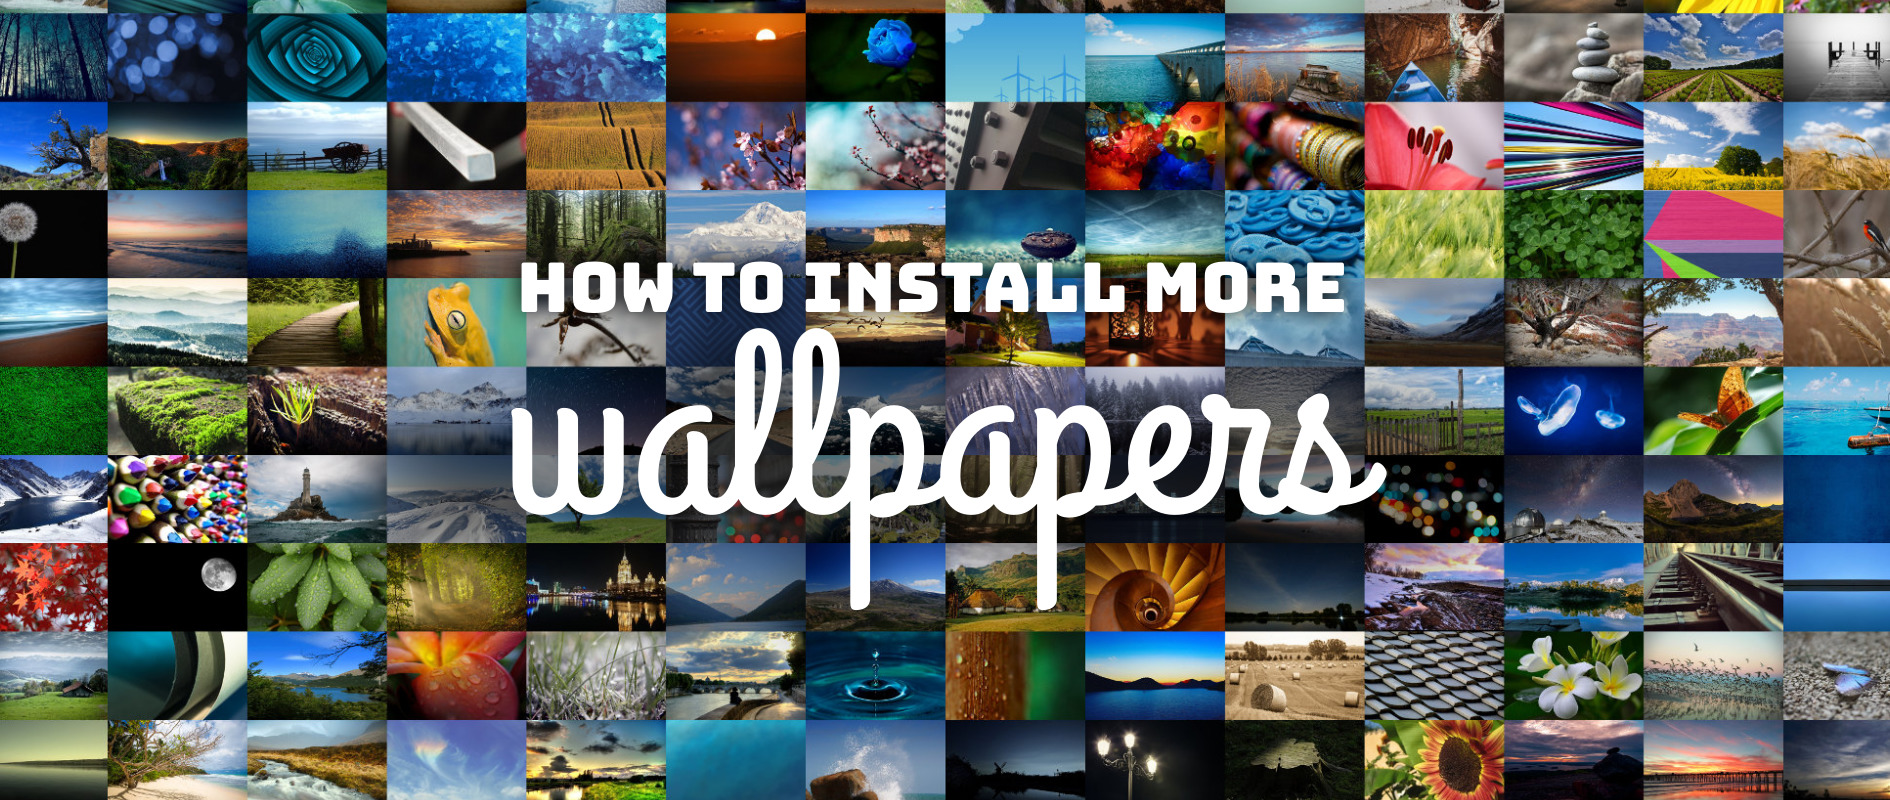 How to install more wallpaper packs on Fedora Workstation - Fedora Magazine